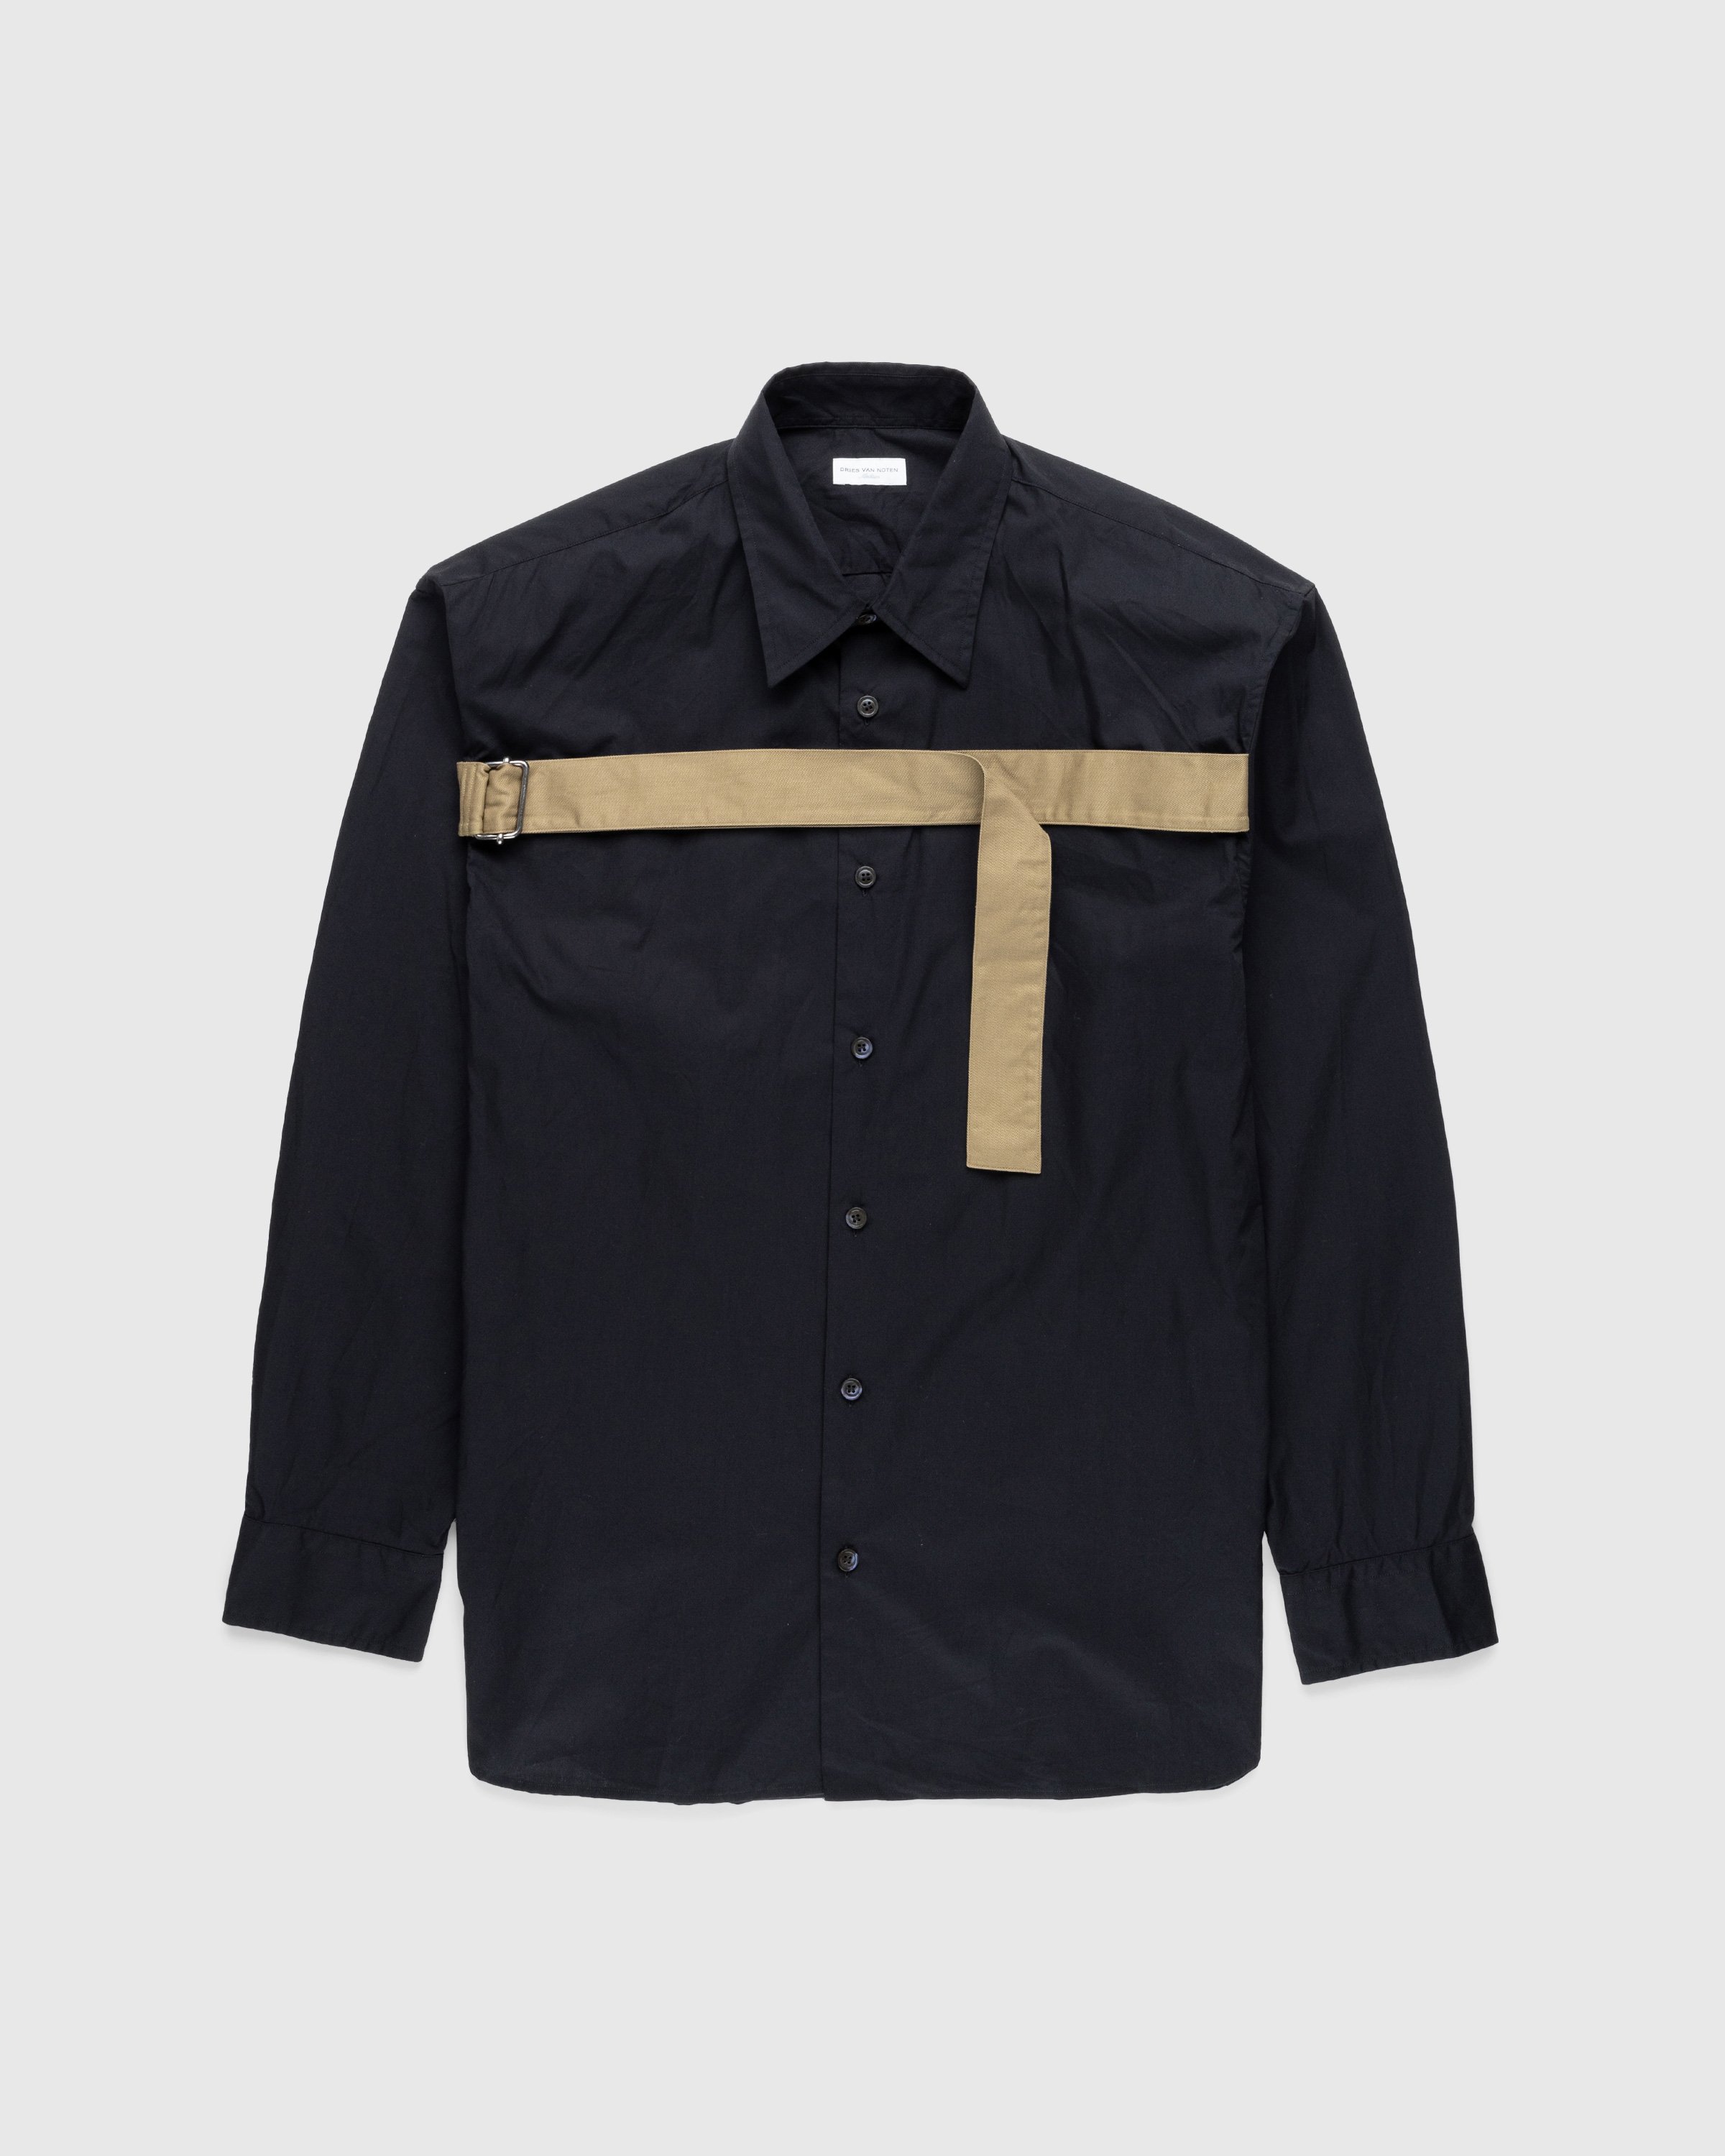 Dries van Noten - Croom Bis Shirt Black - Clothing - Black - Image 1